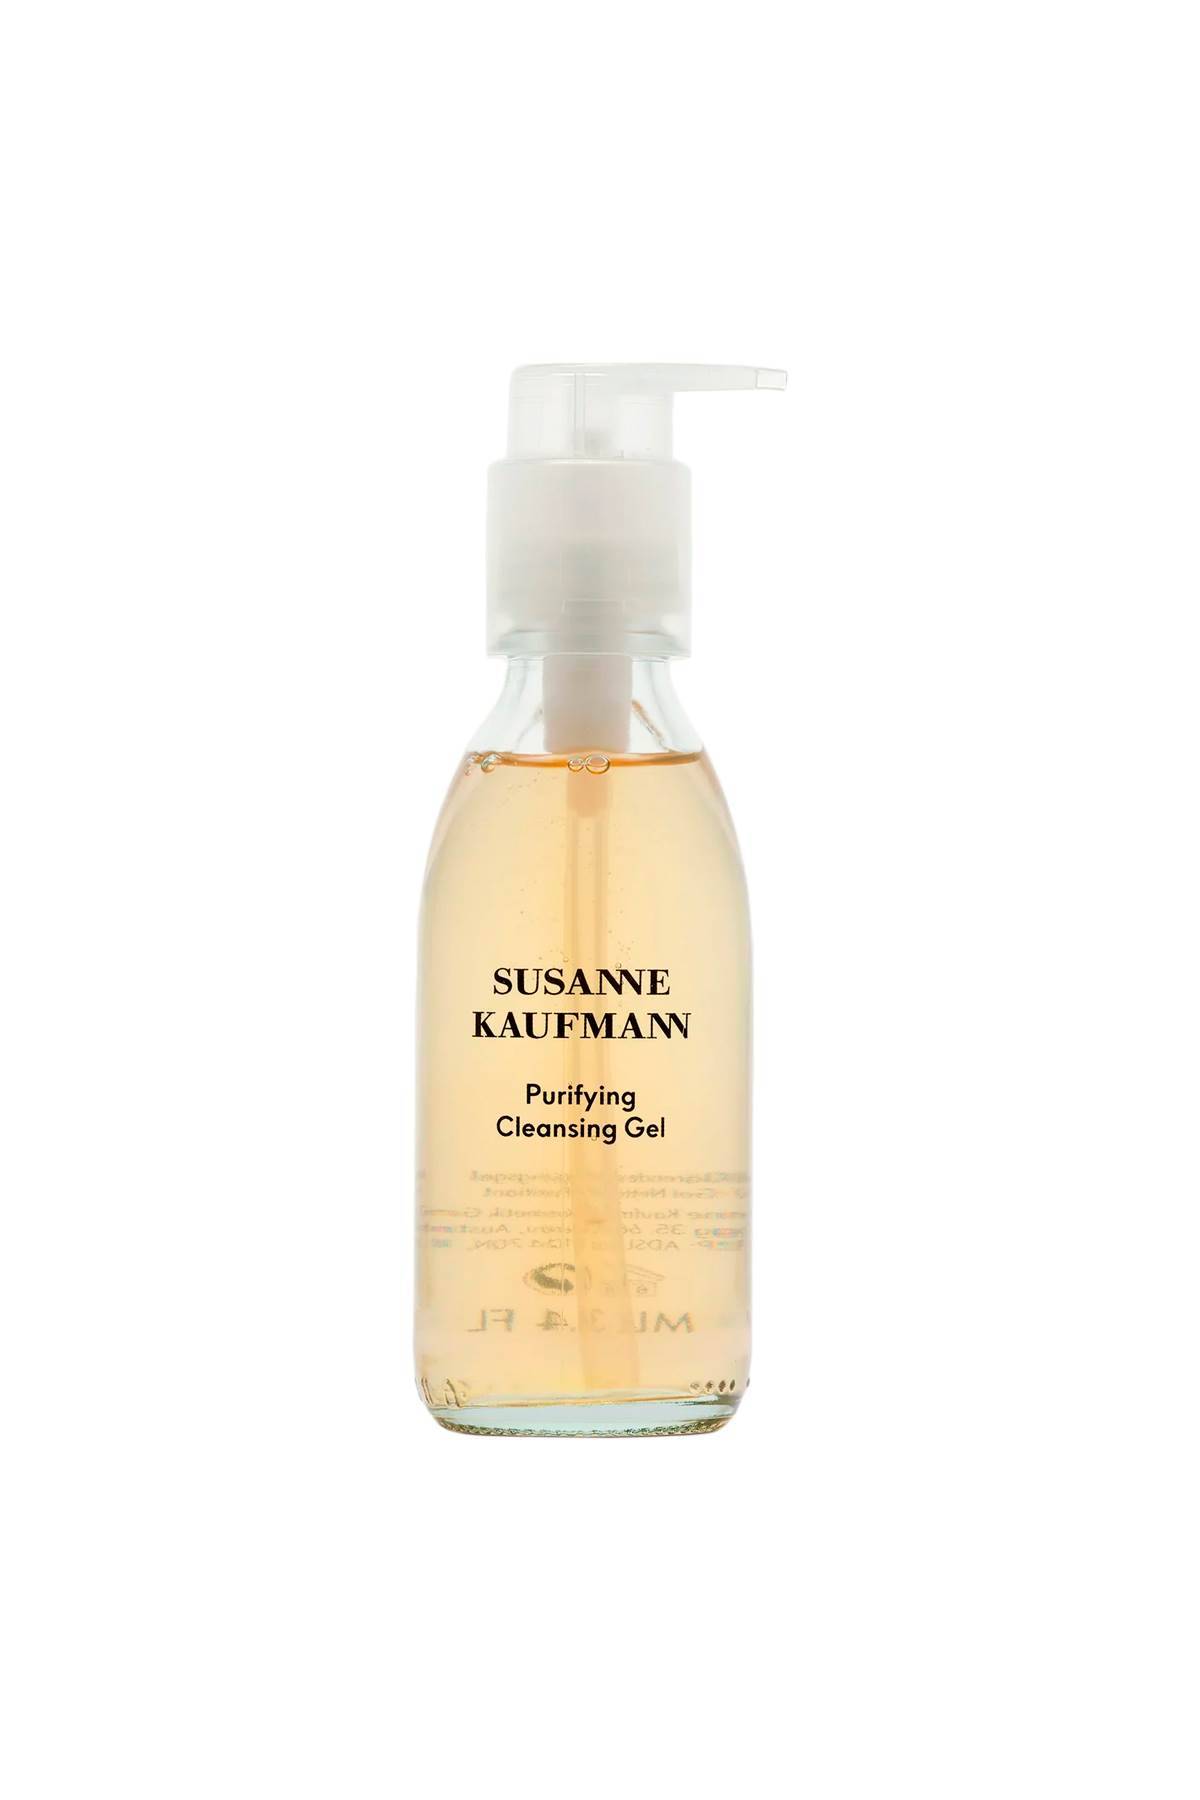 Susanne Kaufmann SUSANNE KAUFMANN purifying cleansing gel - 100 ml